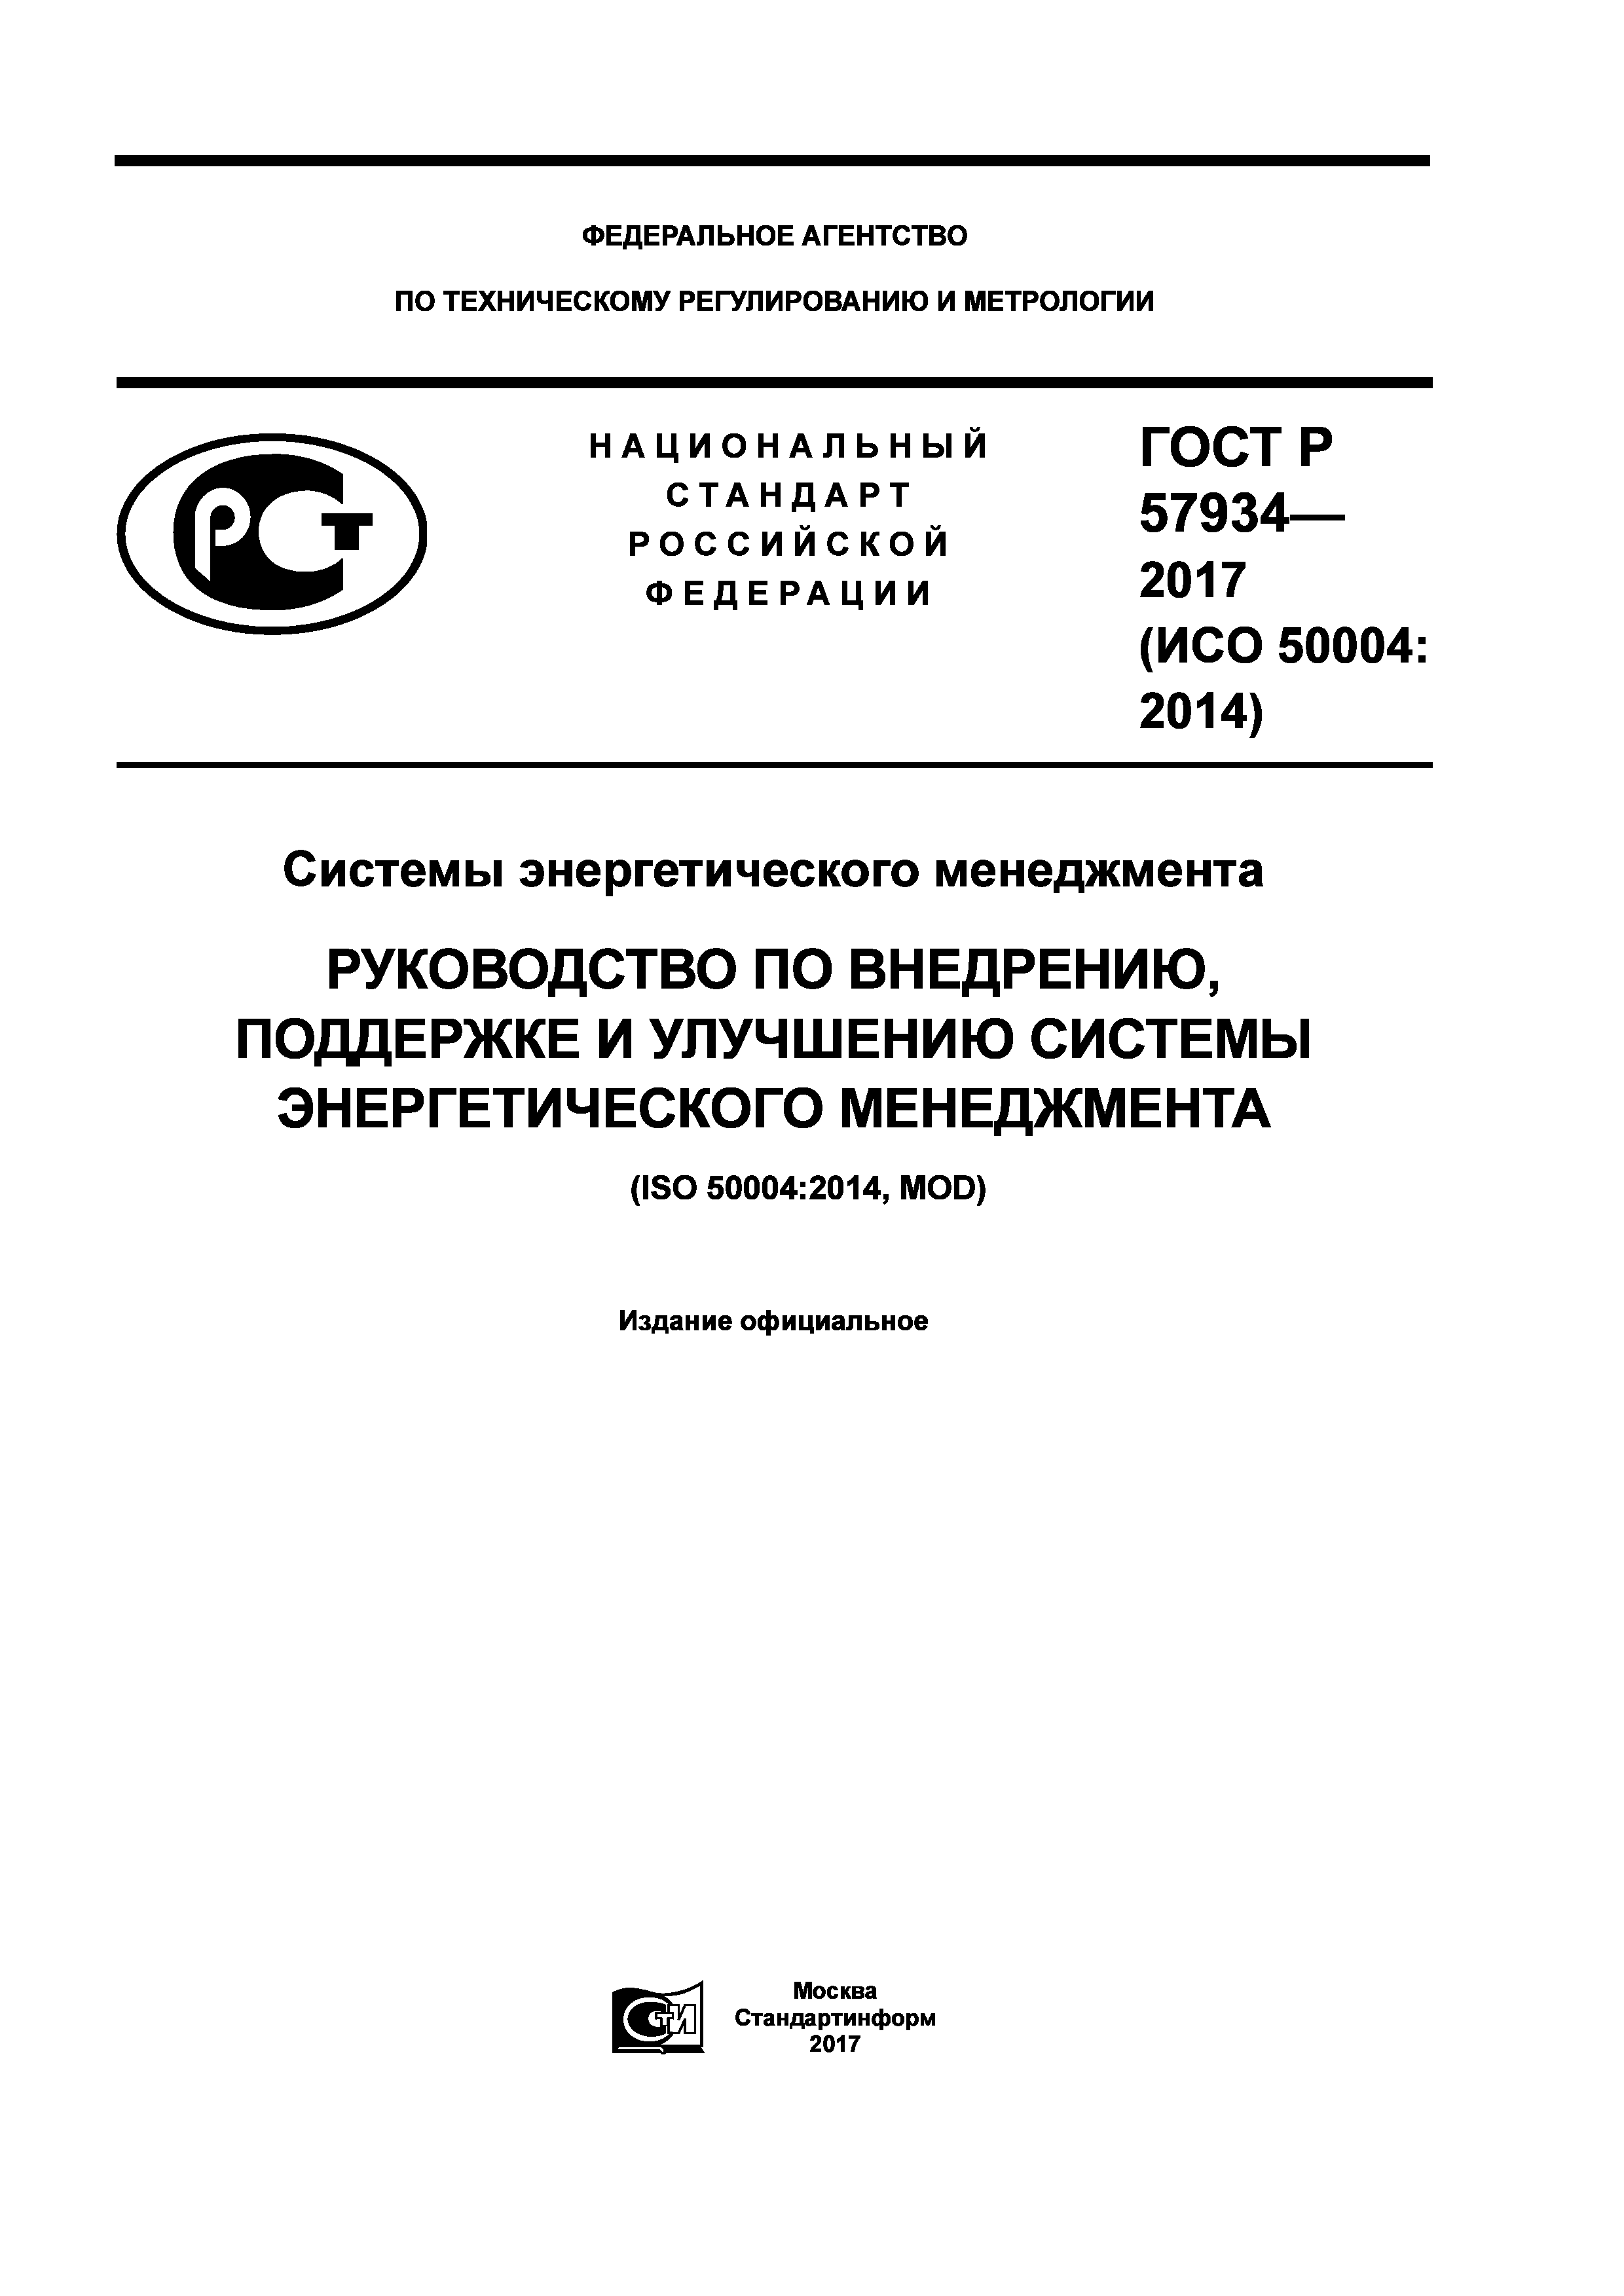 ГОСТ Р 57934-2017